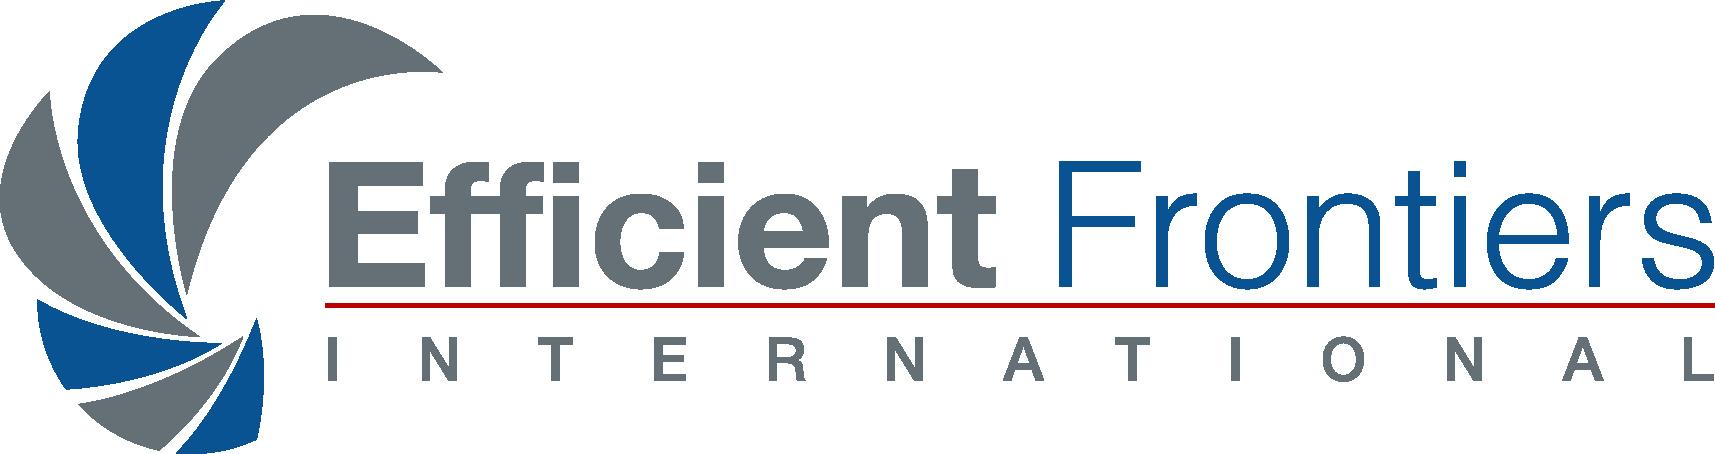 Efficient Frontiers International logo